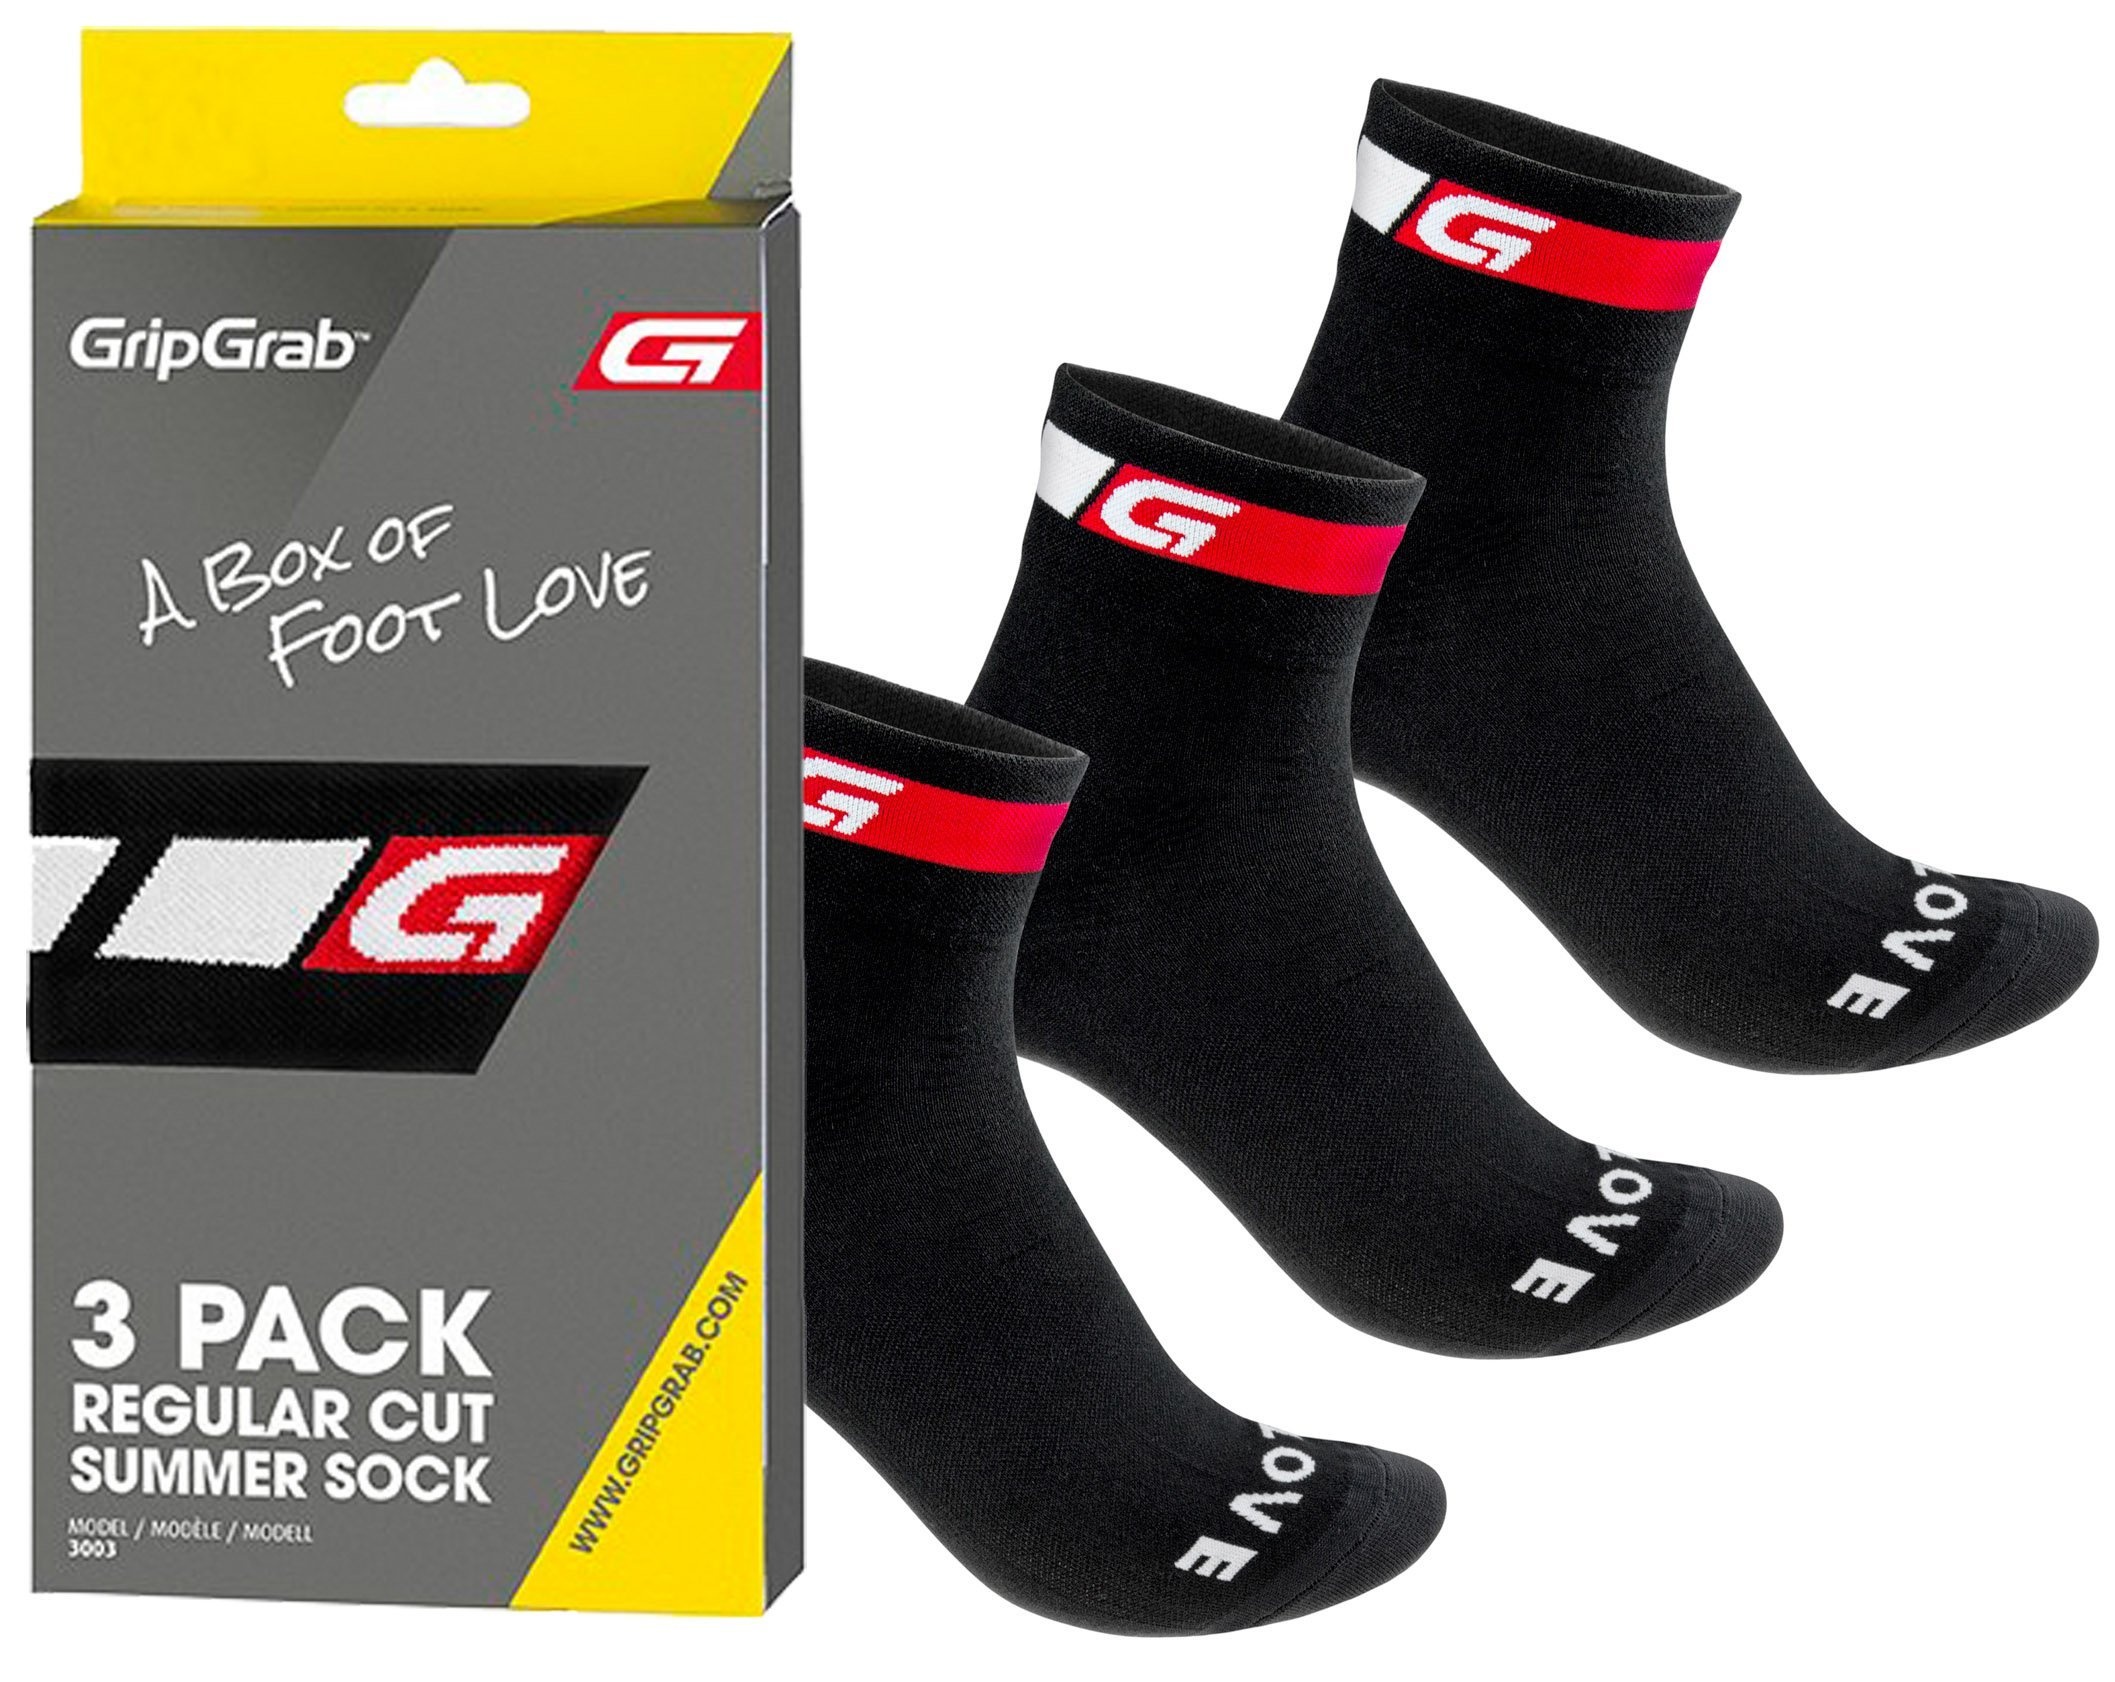 Gripgrab 3-Pack Regular Cut Summer Sock, Sort